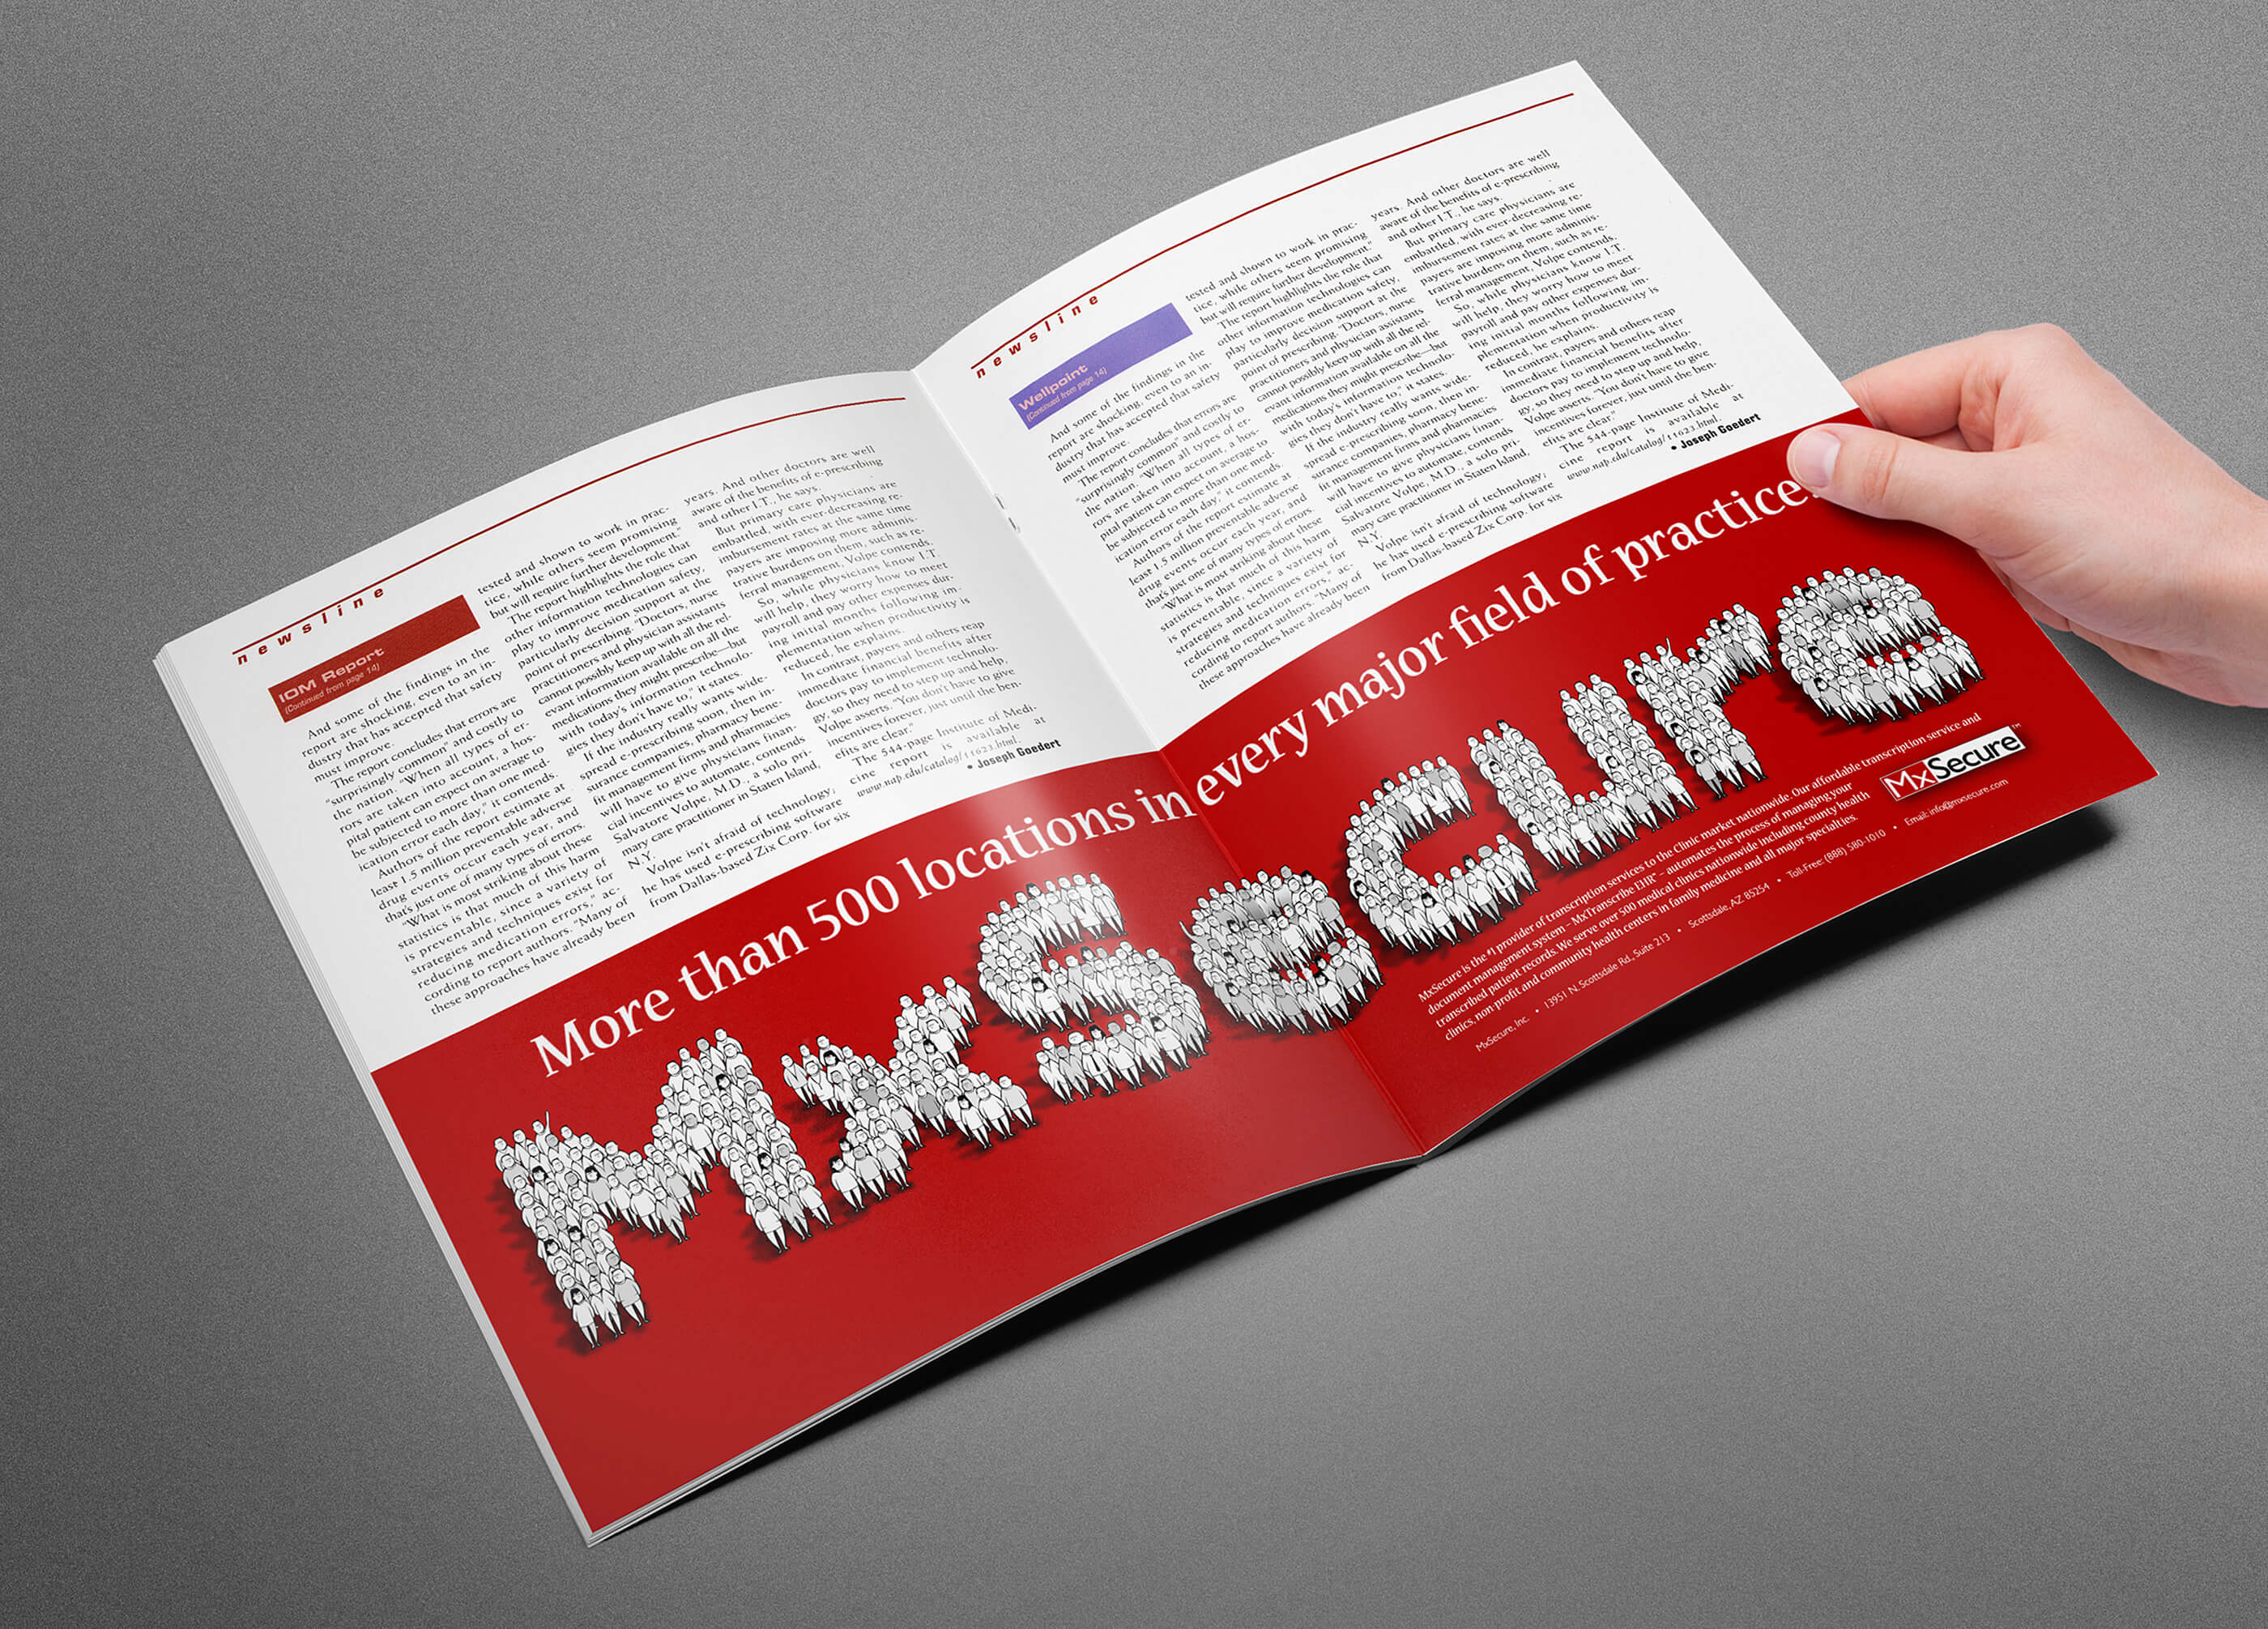 MxSecure print ad #1